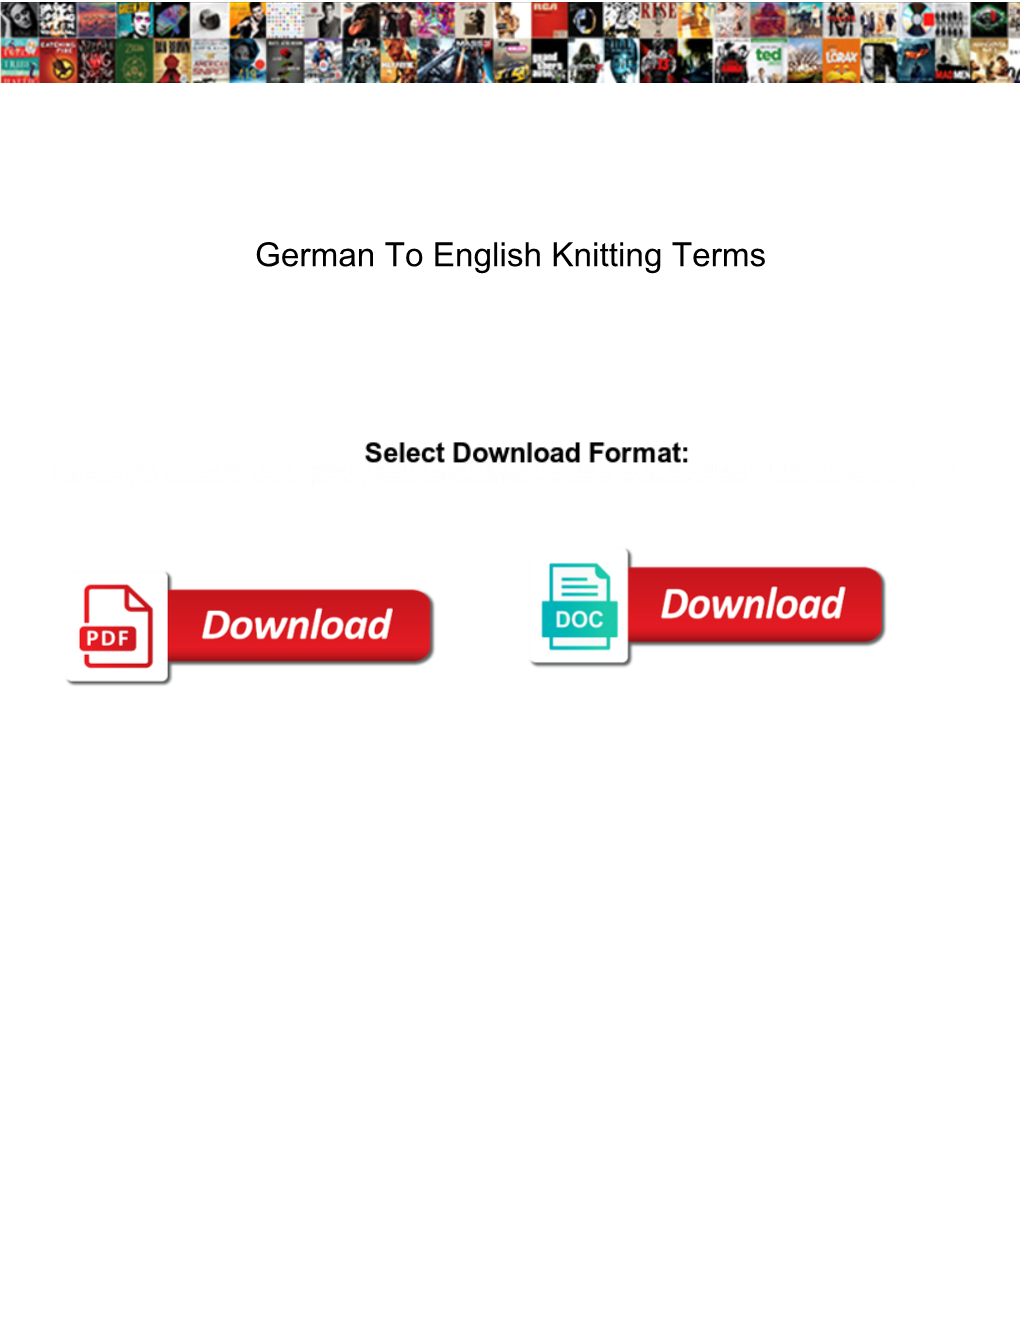 German to English Knitting Terms